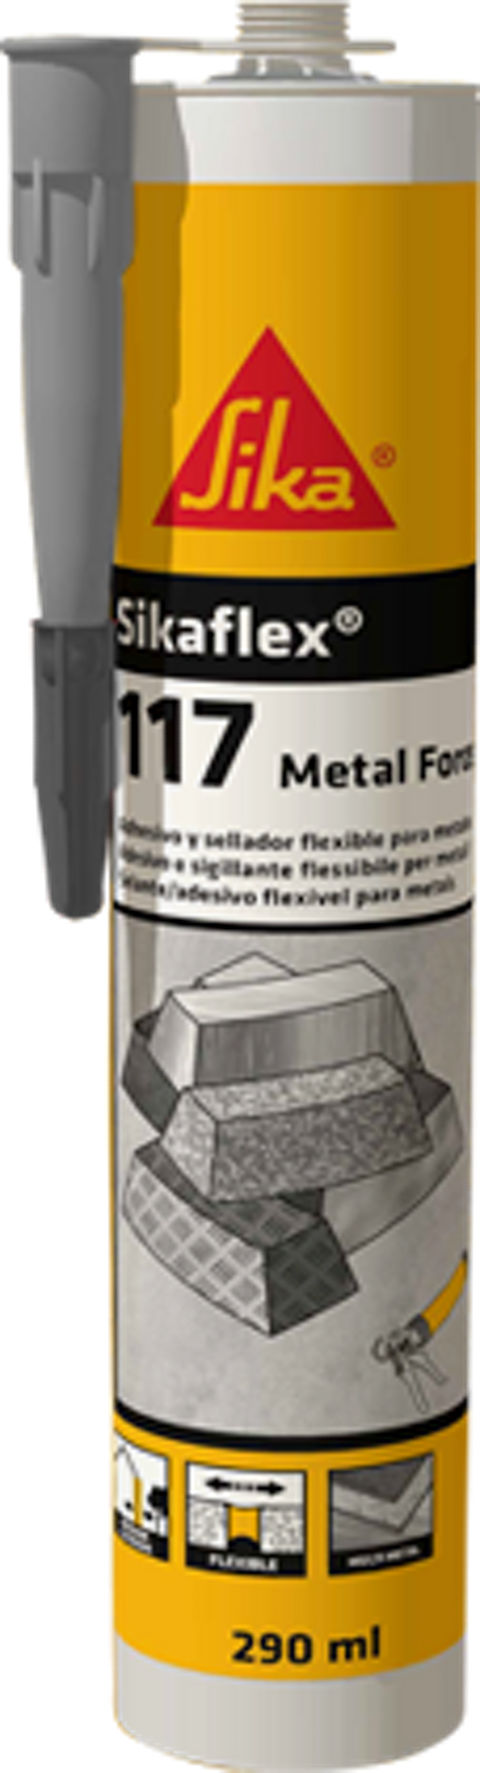 Sikaflex®-117 Metal Force